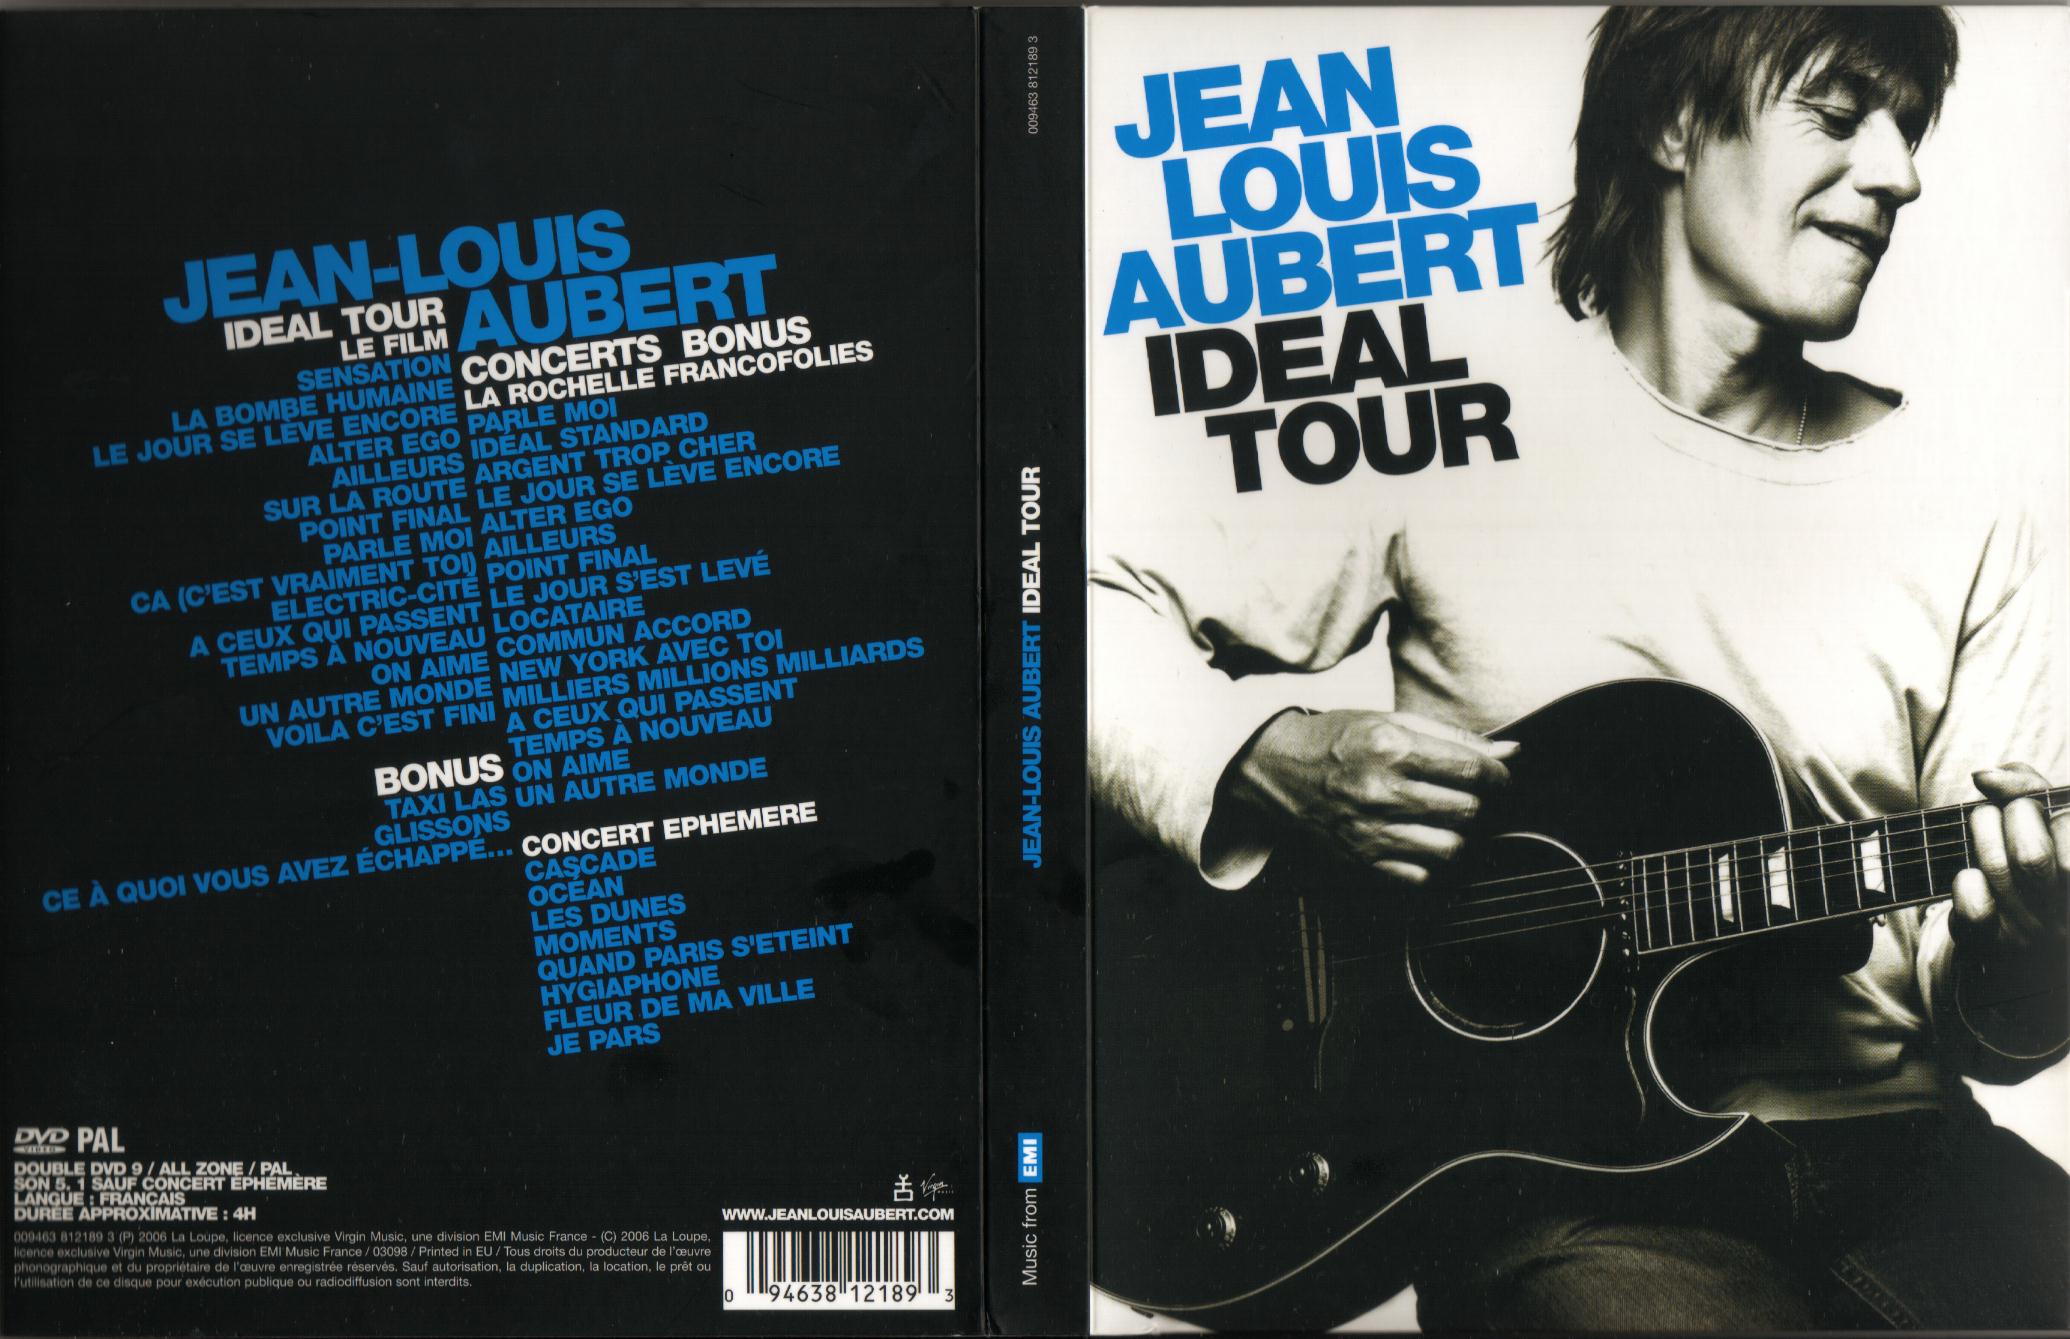 Jaquette DVD Jean-Louis Aubert  Idal Tour